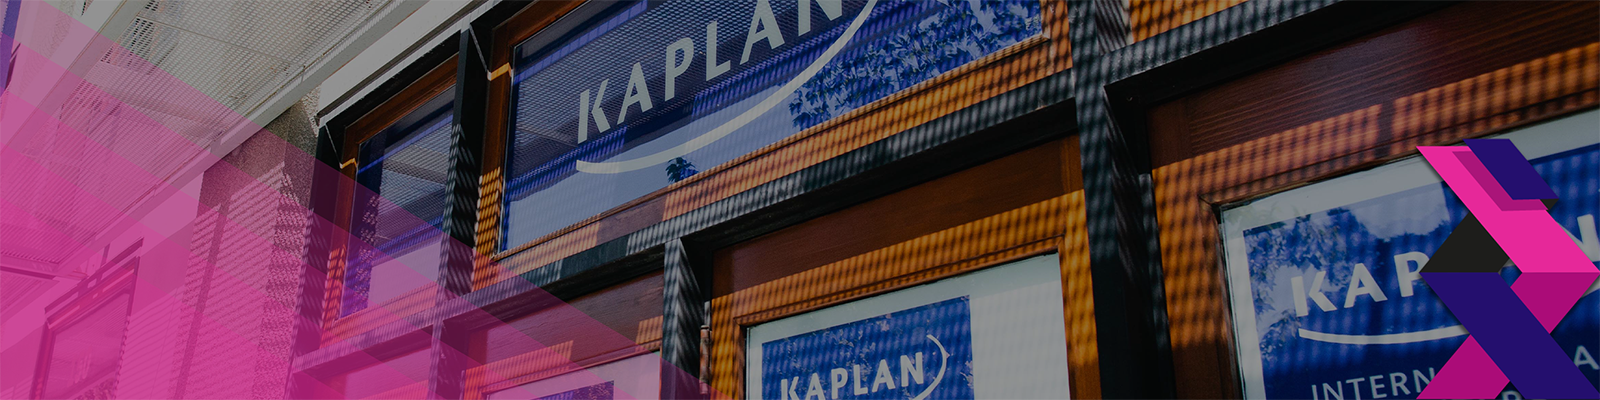 Kaplan International Languages - Manchester görseli